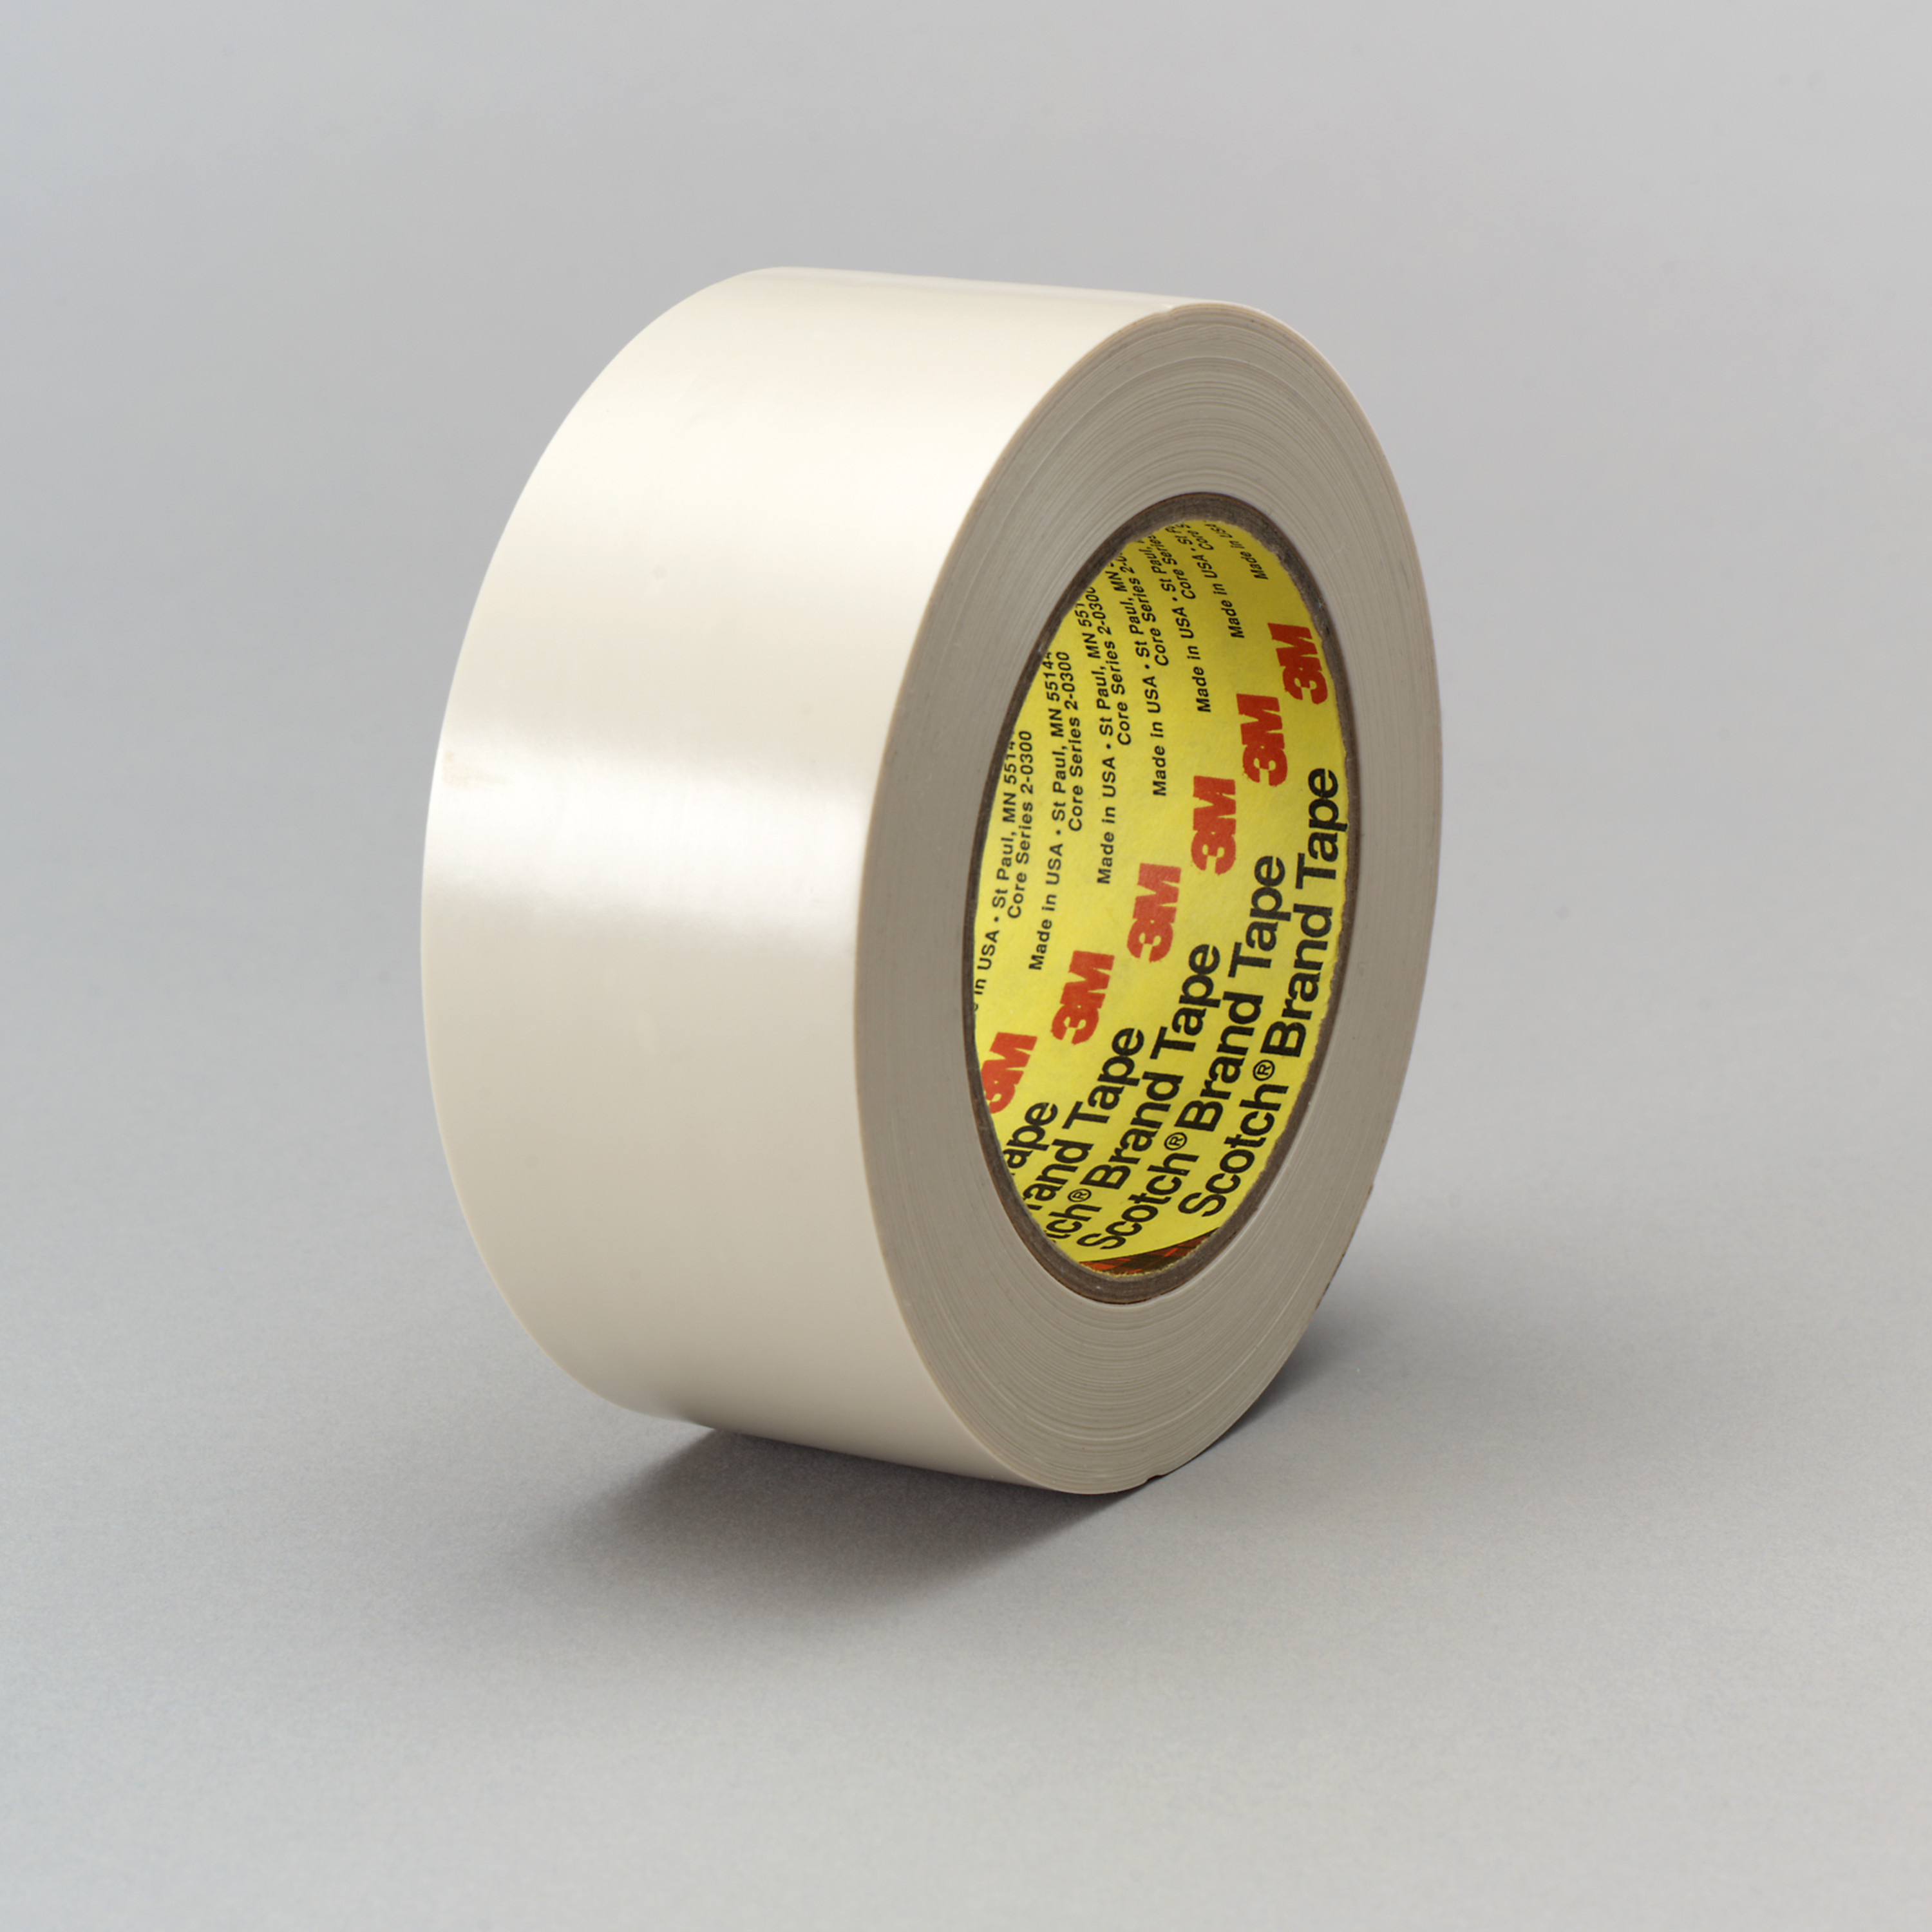 3M™ Electroplating Tape 470, Tan, 3 in x 36 yd, 7.1 mil, 12 rolls per
case